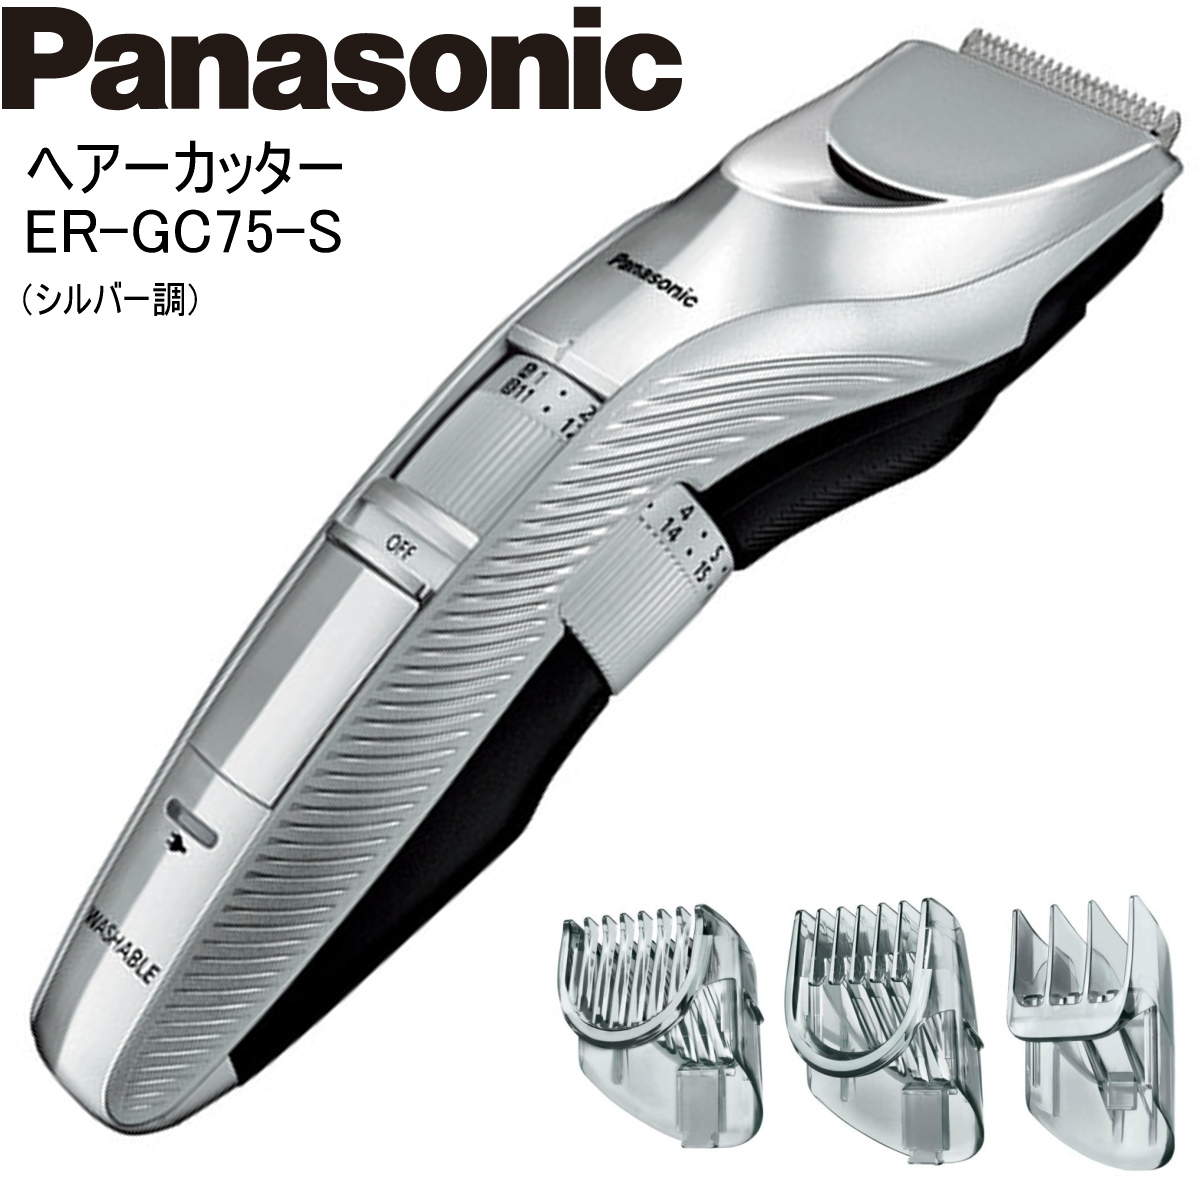 Panasonic ER-GC74-S SILVER - 通販 - guianegro.com.br